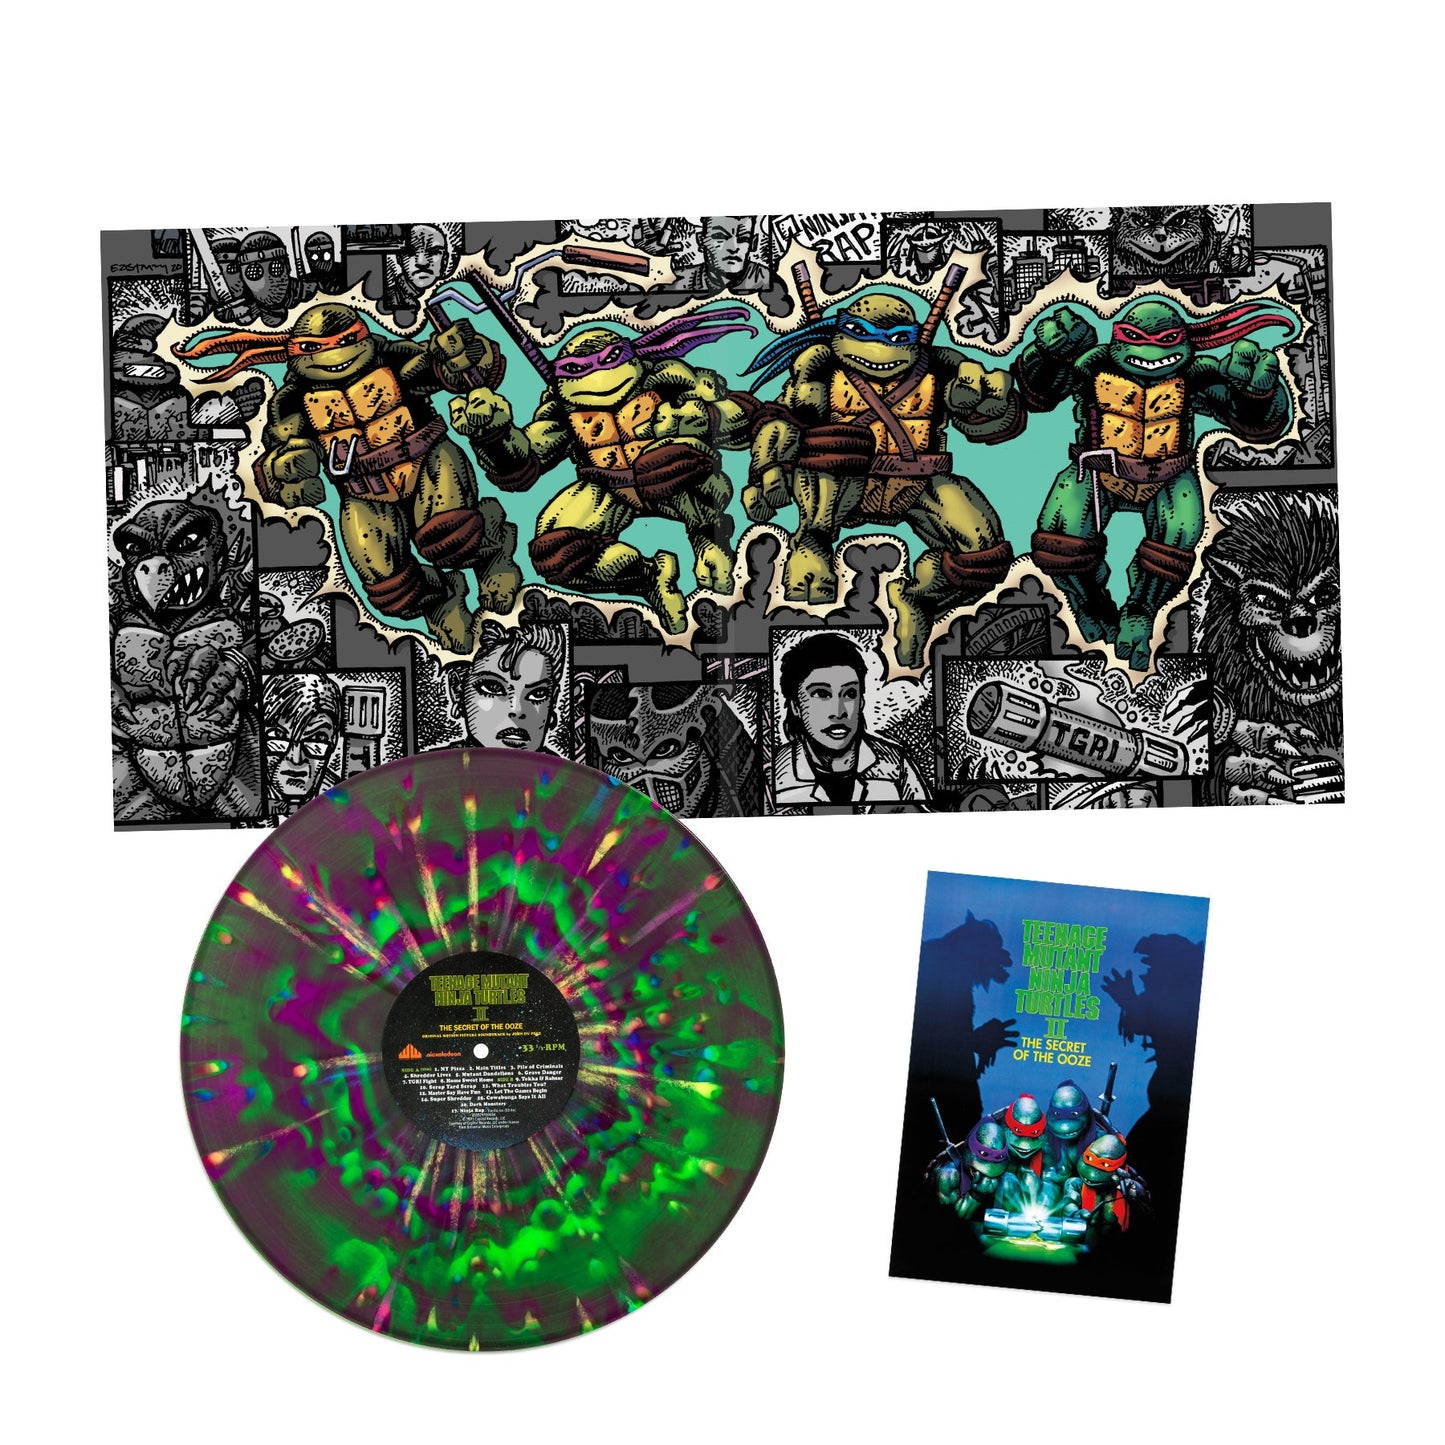 John Du Prez - Teenage Mutant Ninja Turtles II: Secret of the Ooze OST (Green/Purple Super Shredder & Turtles Brawl Vinyl)